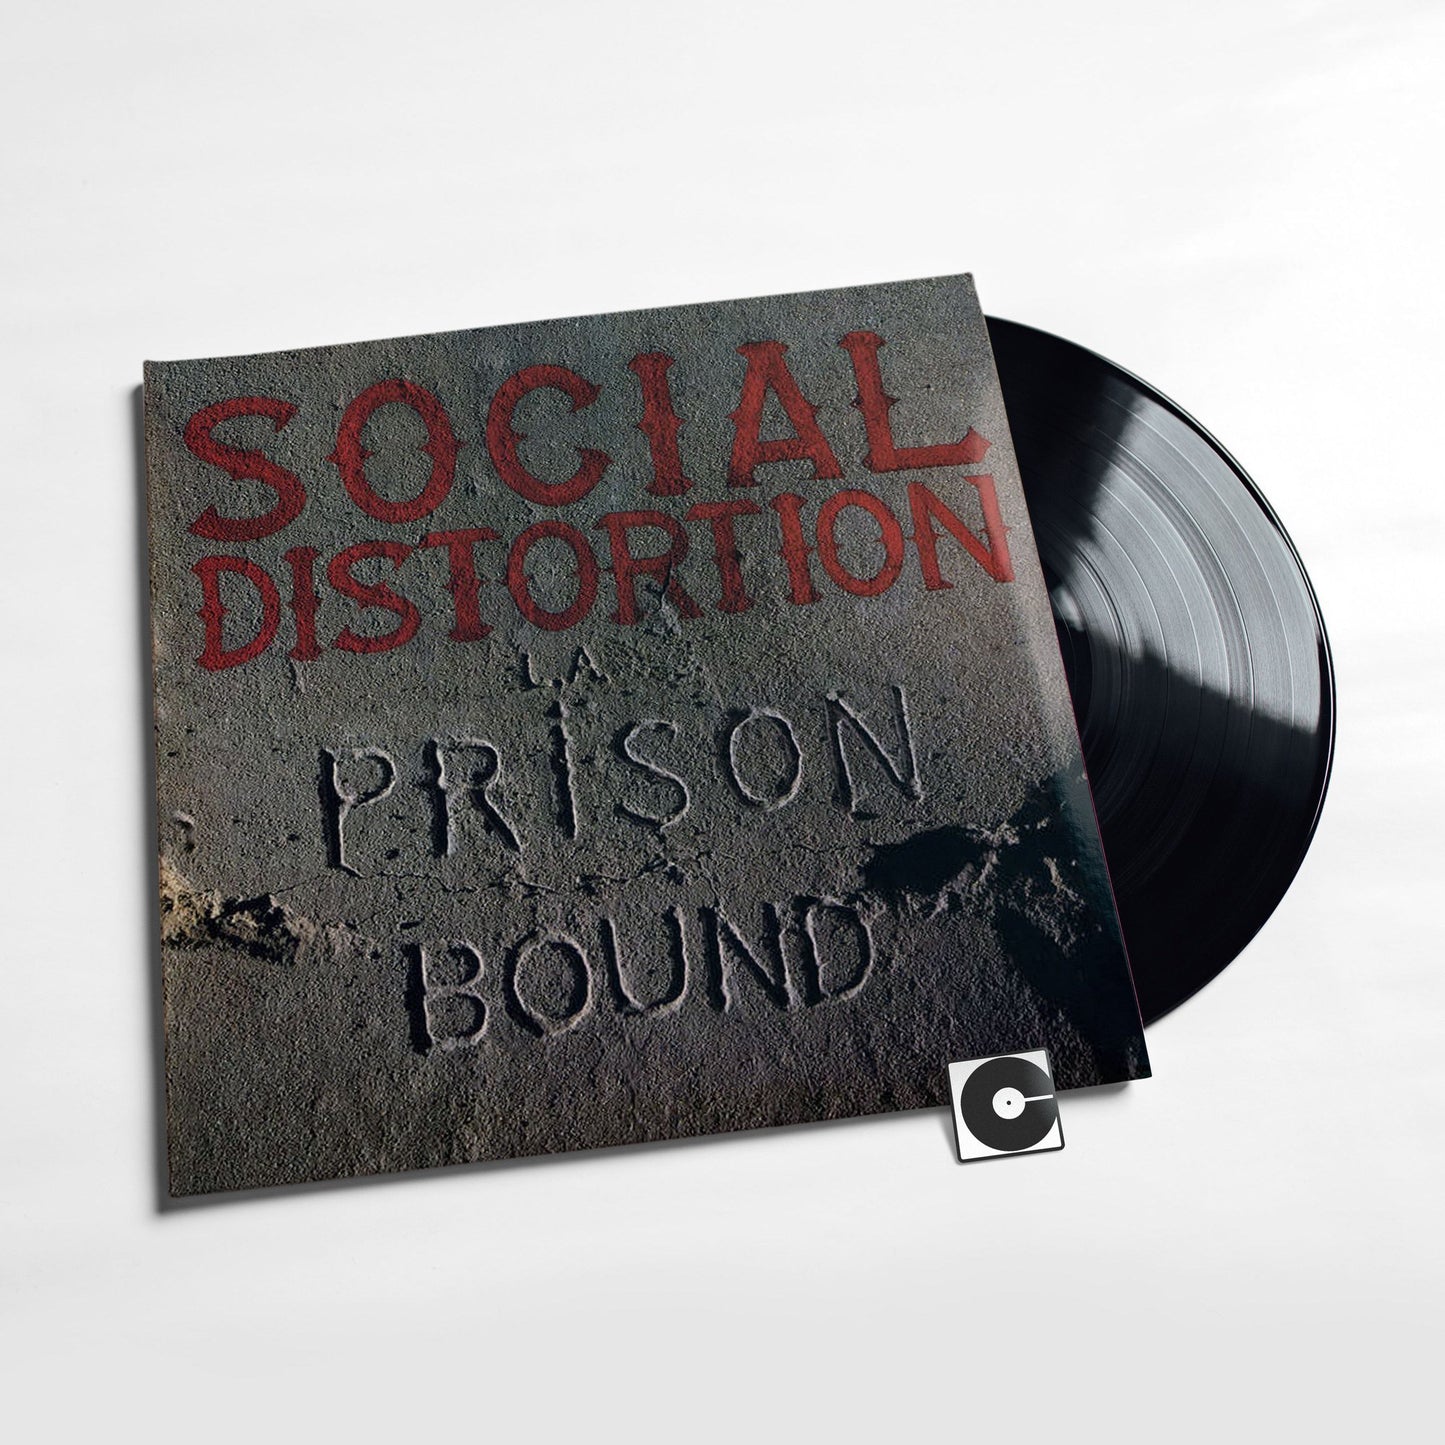 Social Distortion - "Prison Bound"